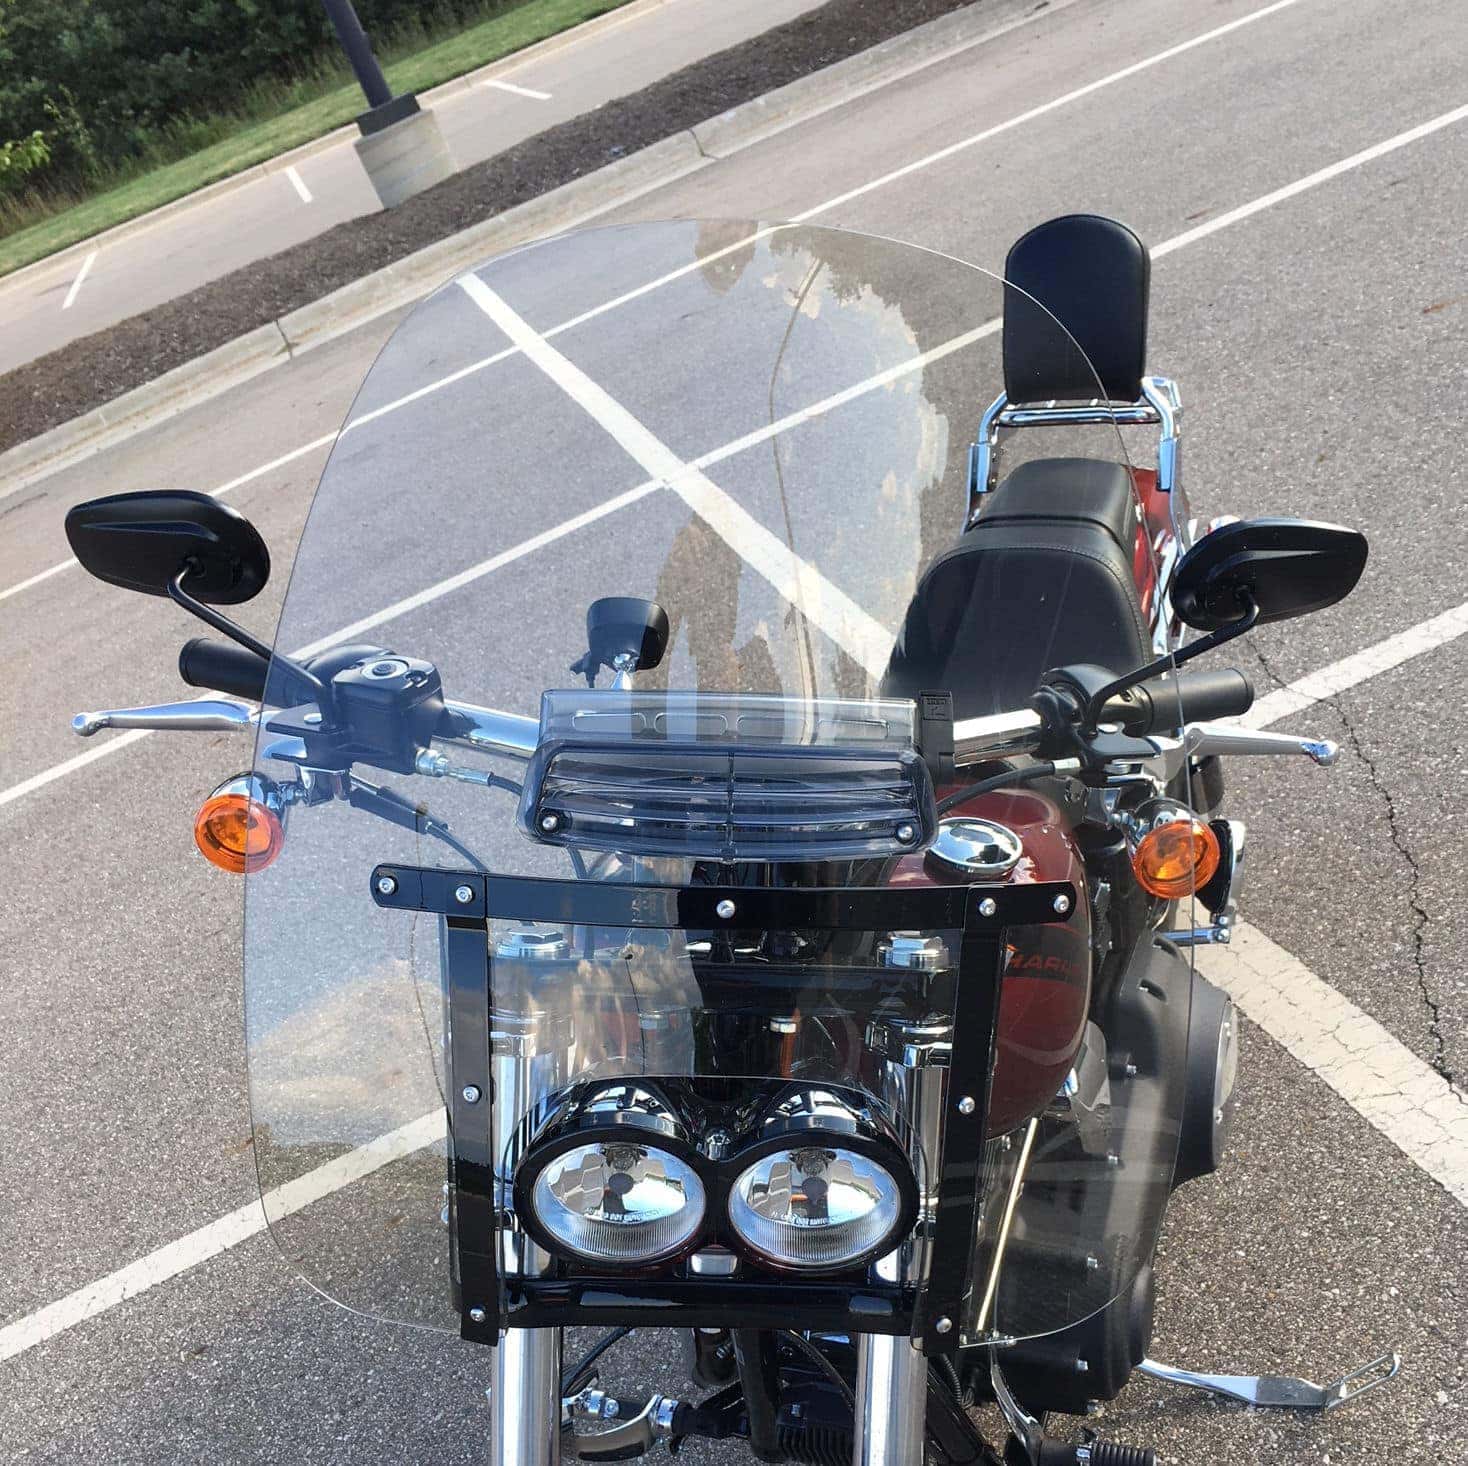 Motorcycle Body Frame 19 Windshield Wind Screen Fits Harley Davidson Dyna Fatbob Road King Softail Motors